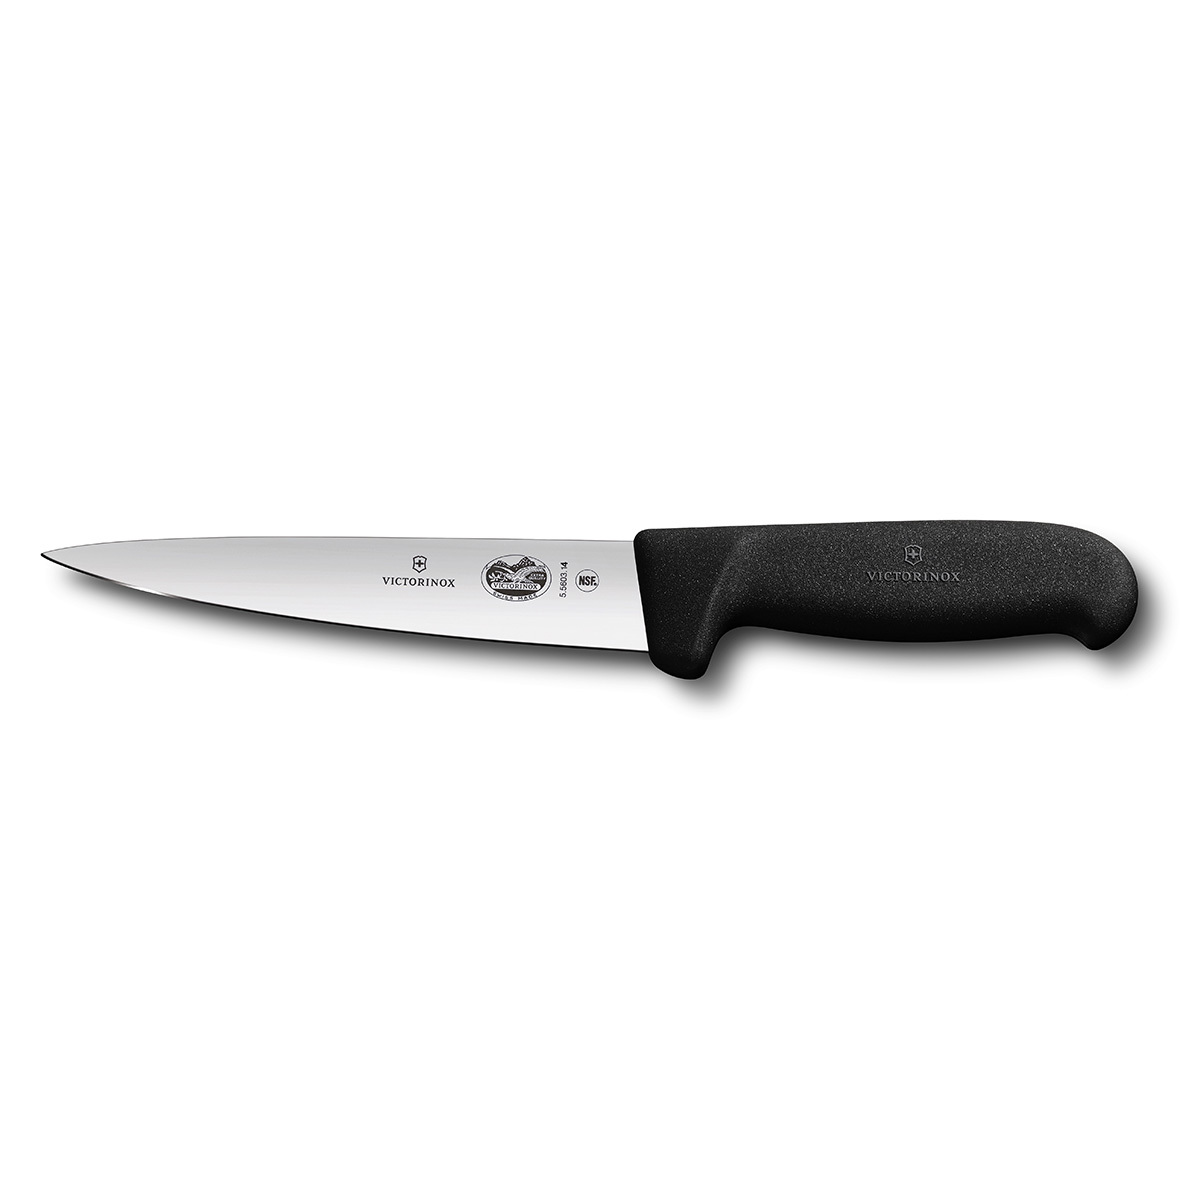 Кухонный нож для разделки Victorinox  5.5603.14 кухонный нож для разделки мяса ladina